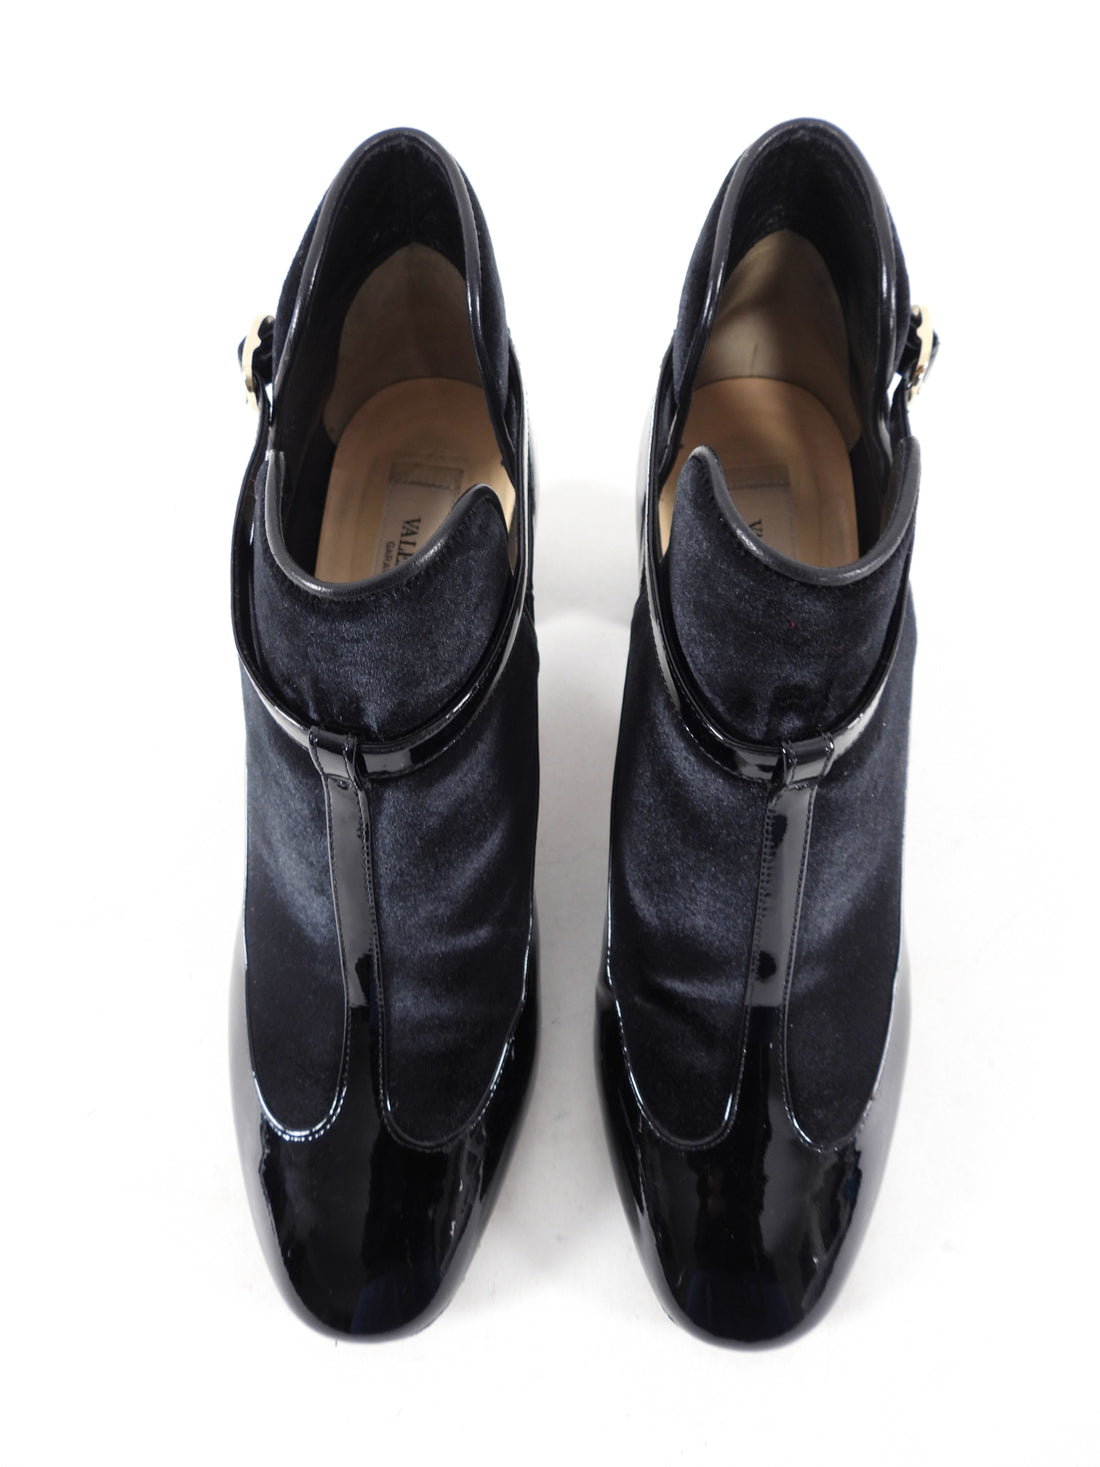 Valentino Black Patent Leather and Velvet Block Heel Boots - 38